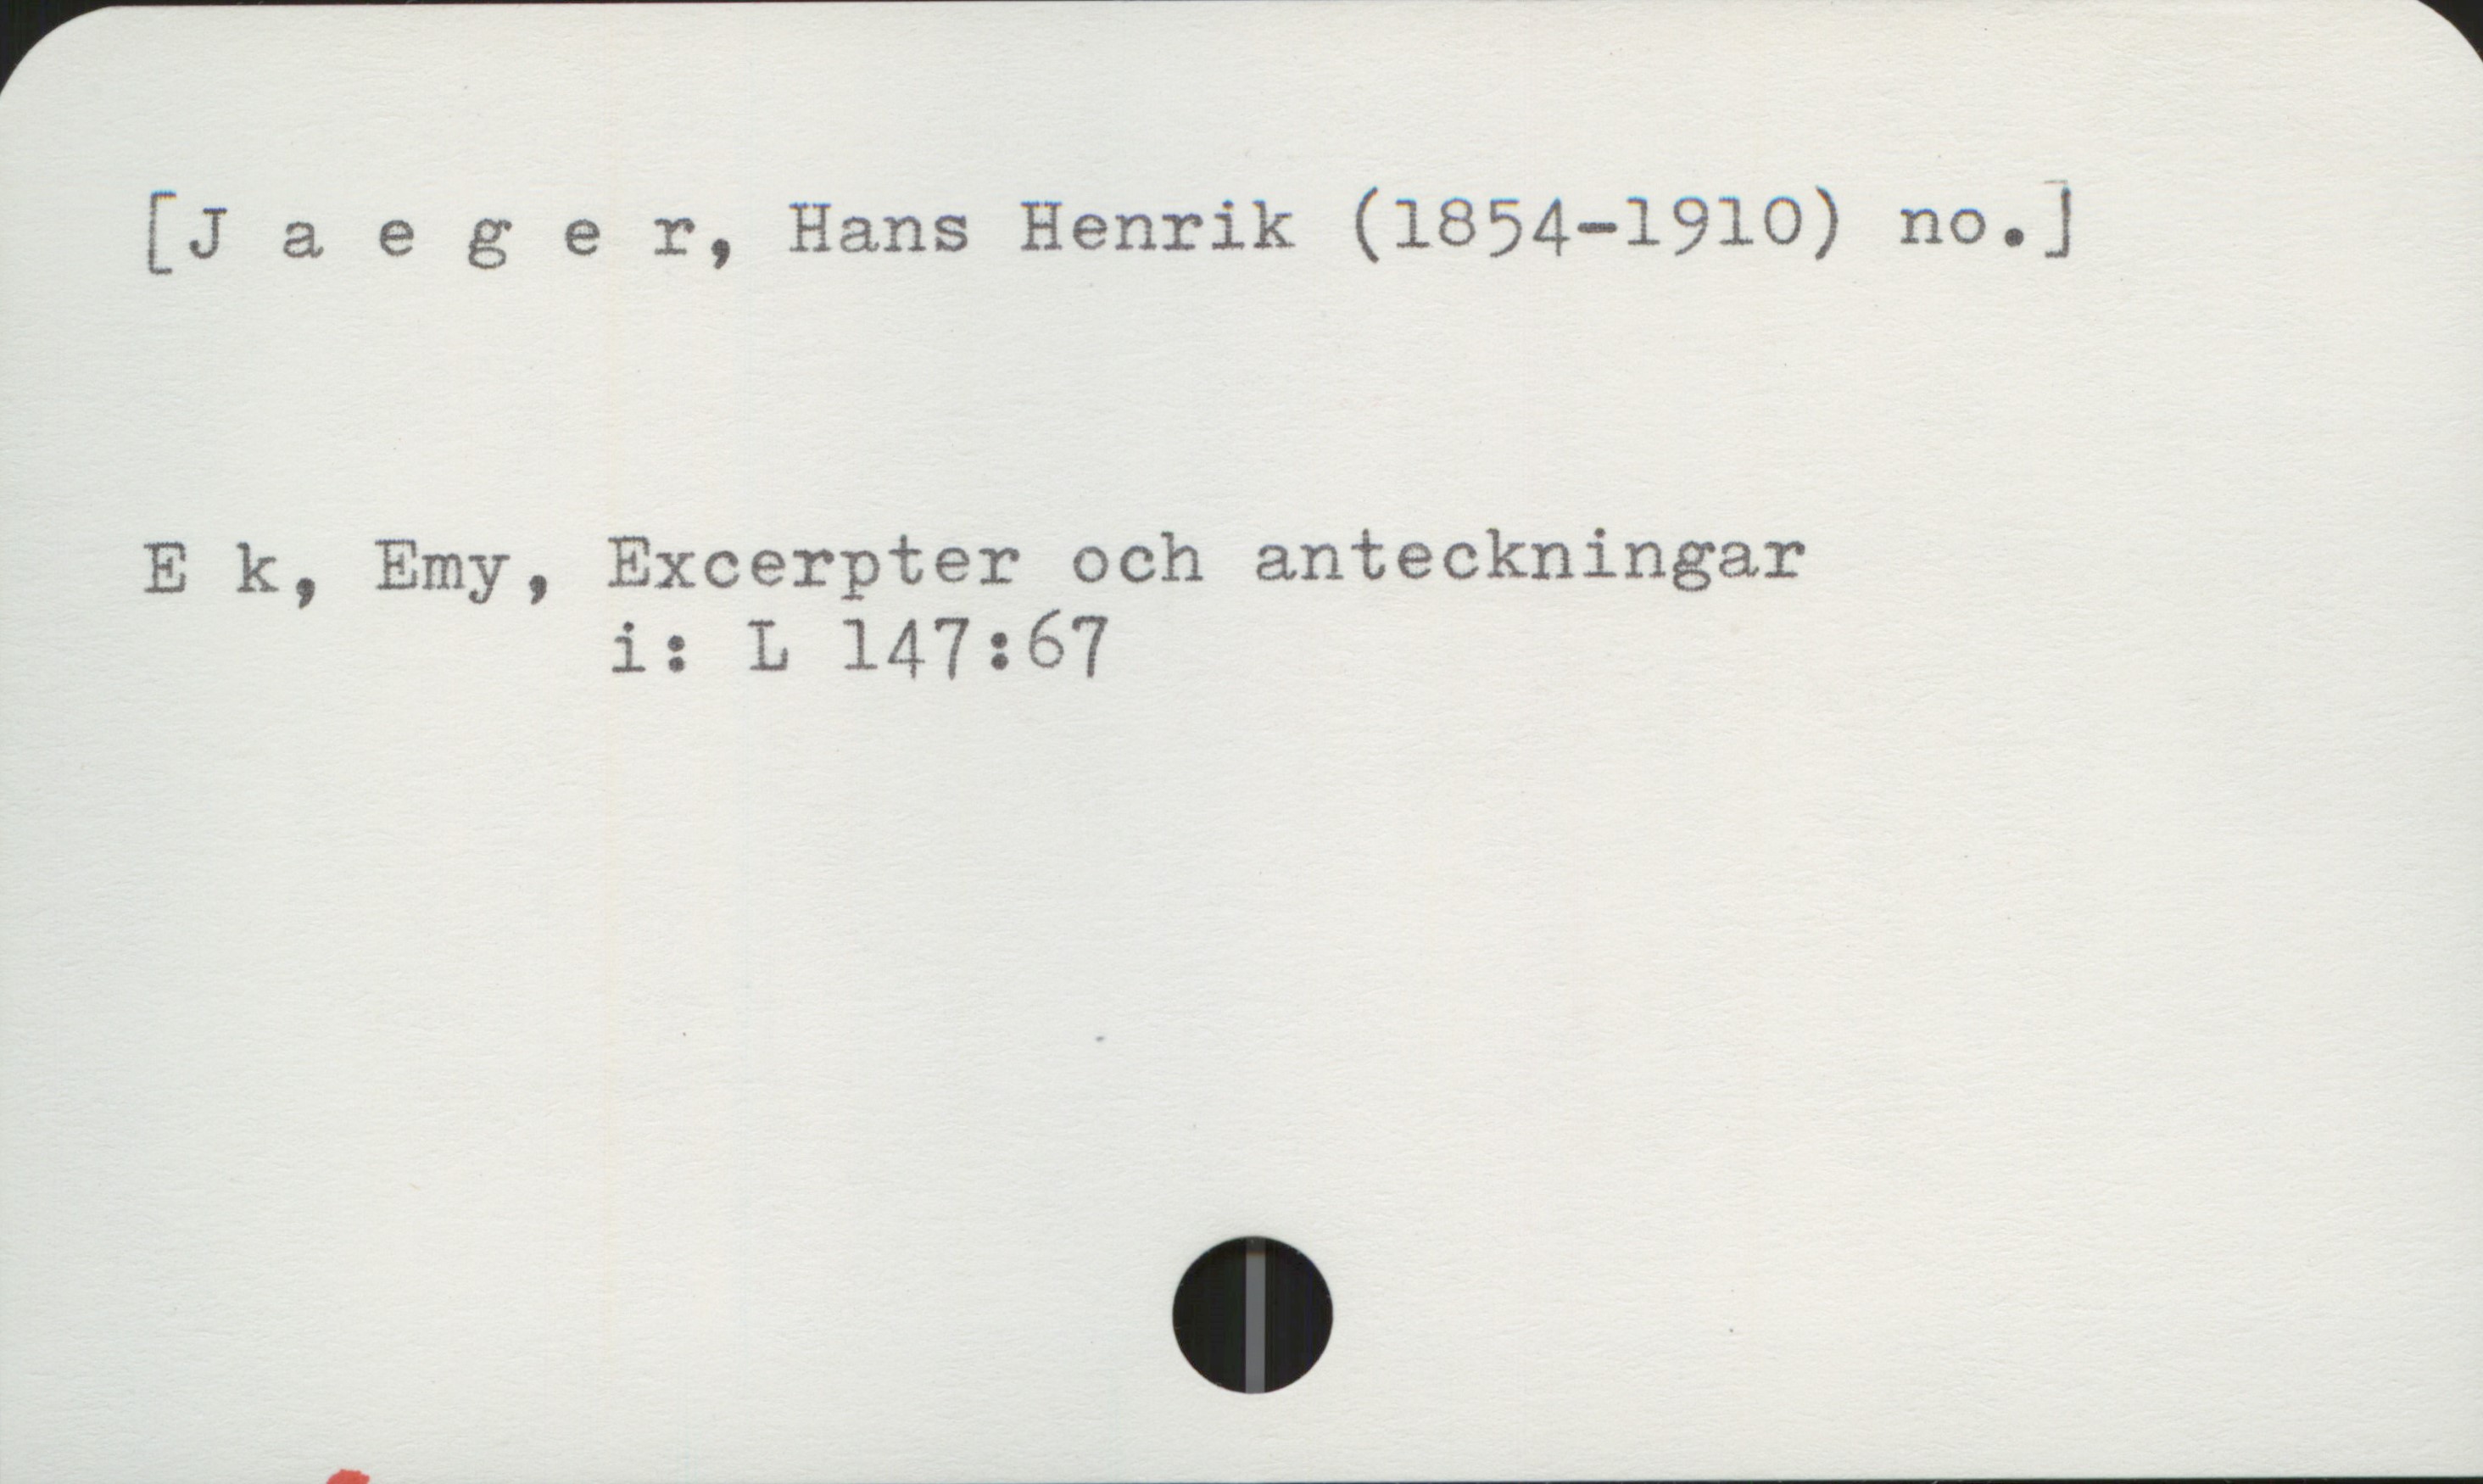 Jaeger, Hans Henrik (1854-1910) [Jaeger, Hans Henrik (1854-1910) no.]

E k, Emy, Excerpter och anteckningar
                 i: L 147:67